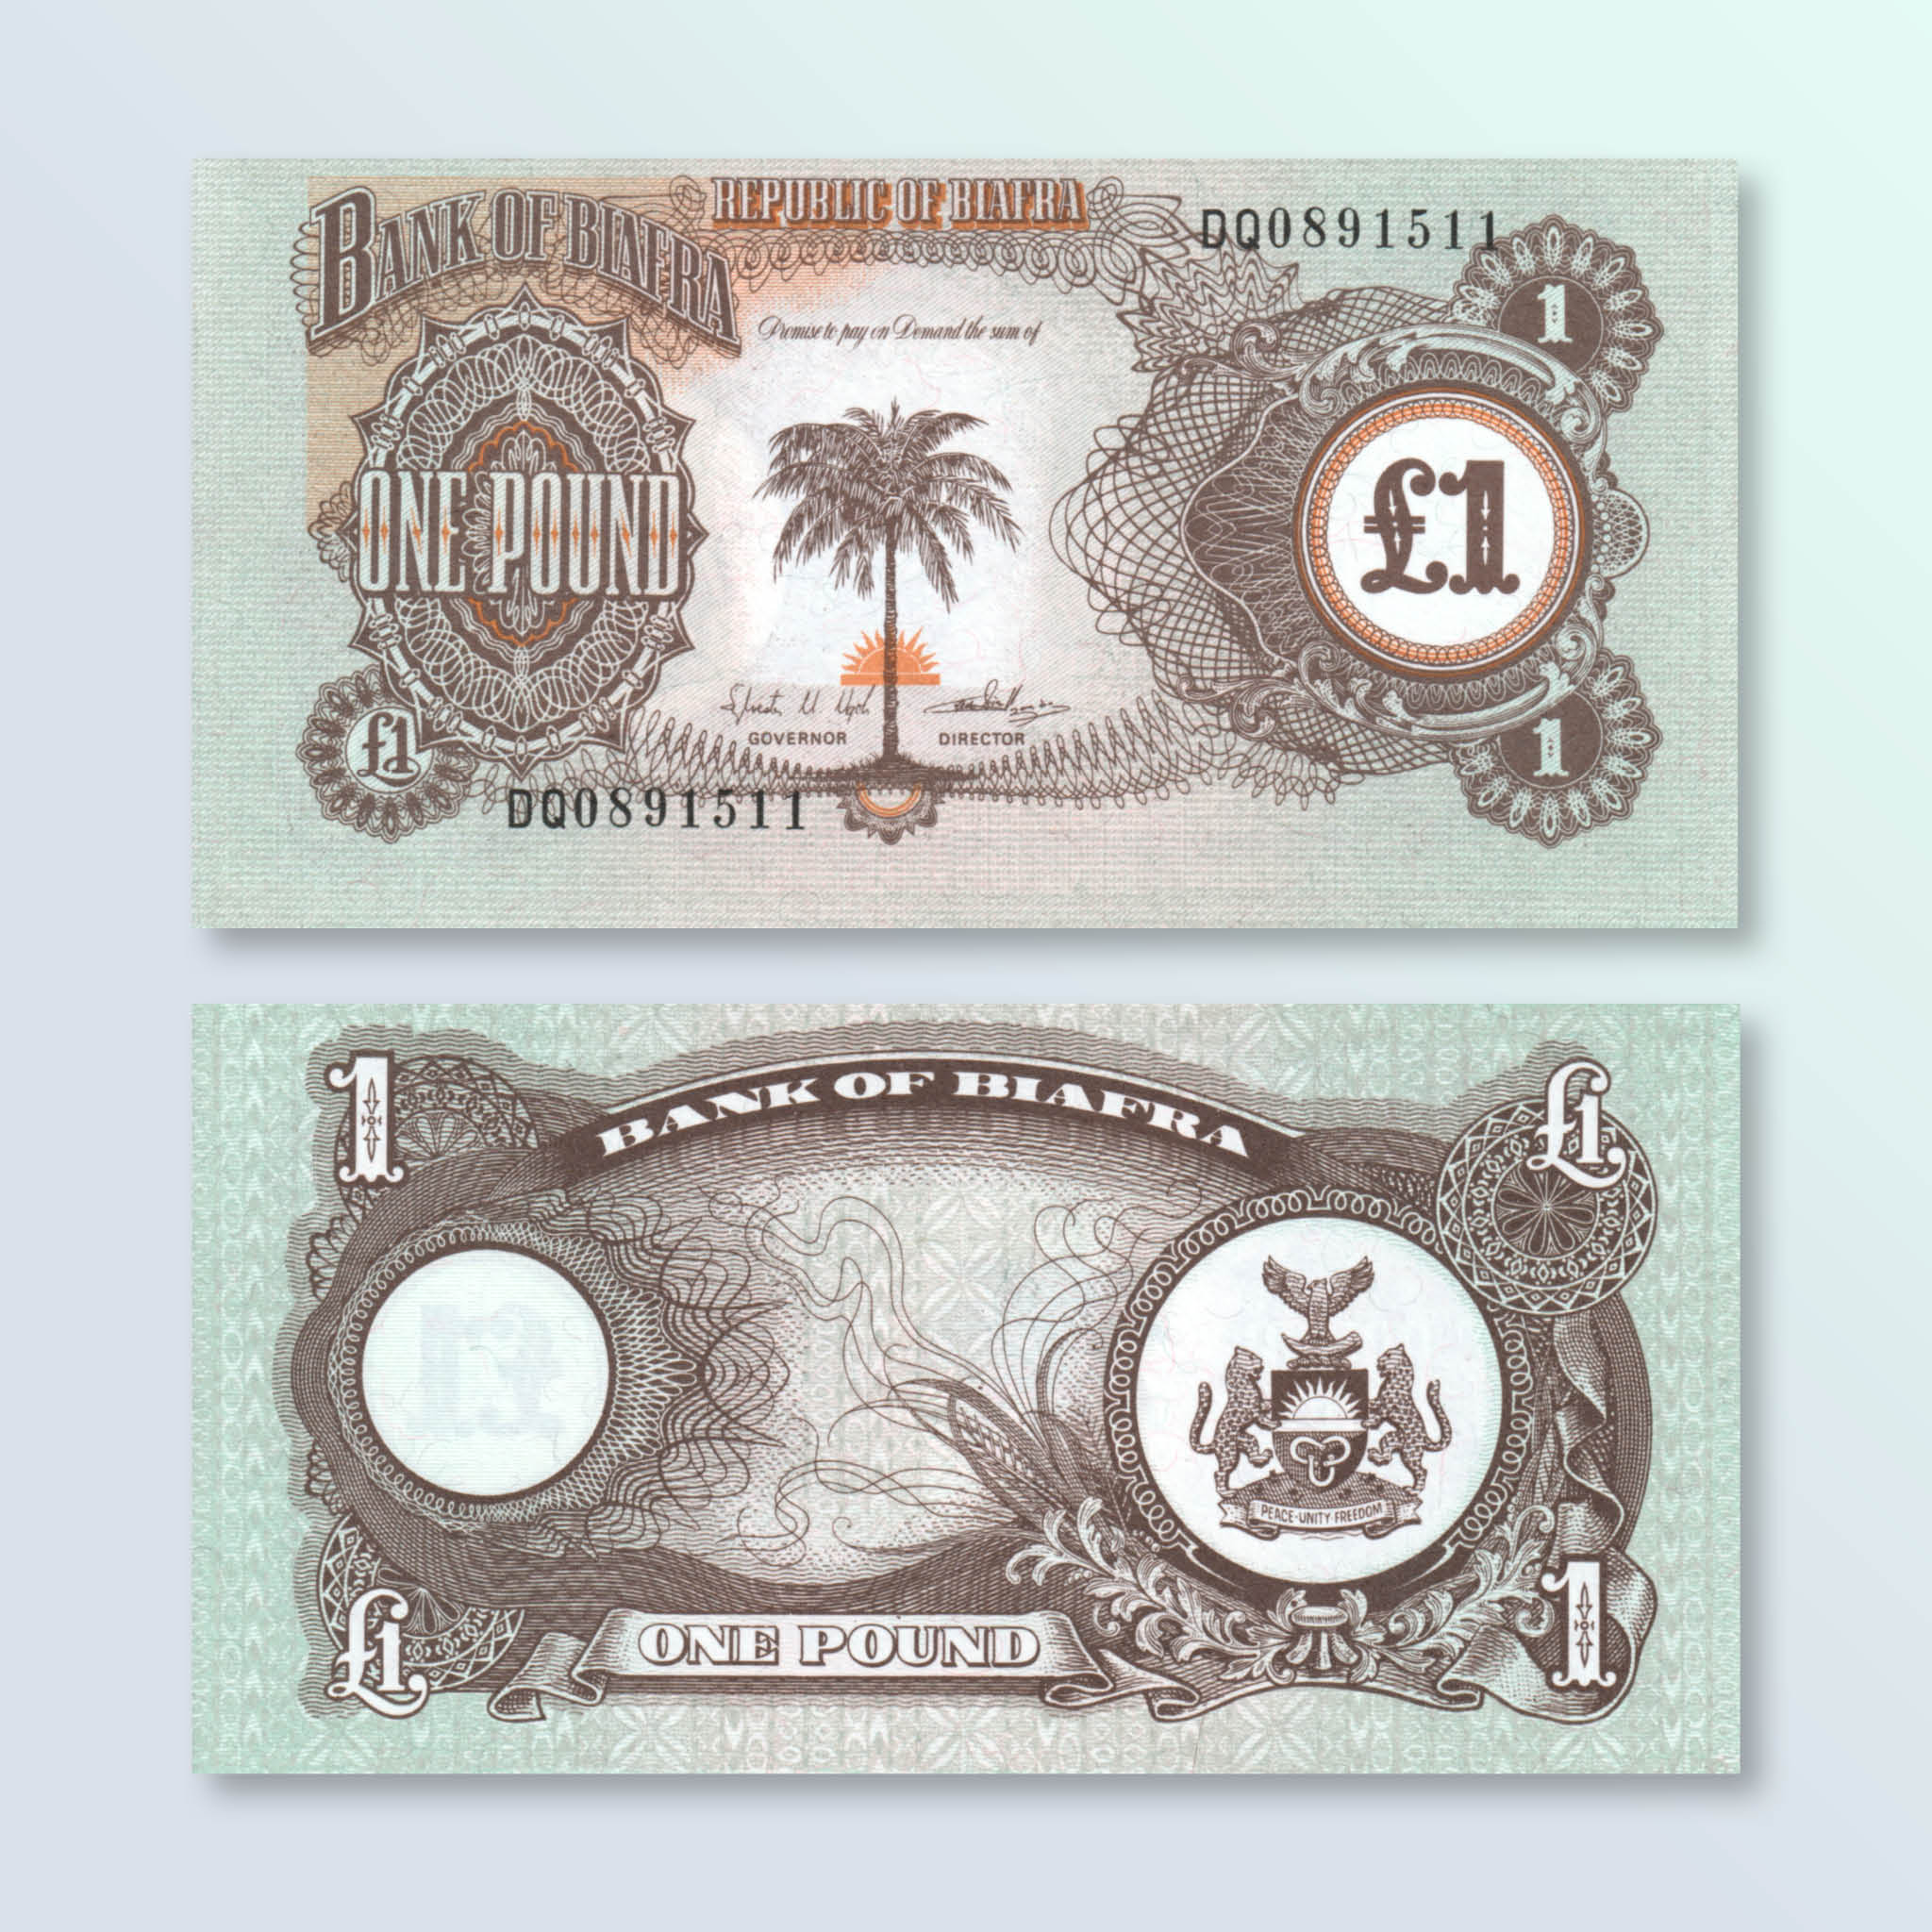 Biafra 1 Pound, 1969, B105a, P5a, UNC - Robert's World Money - World Banknotes